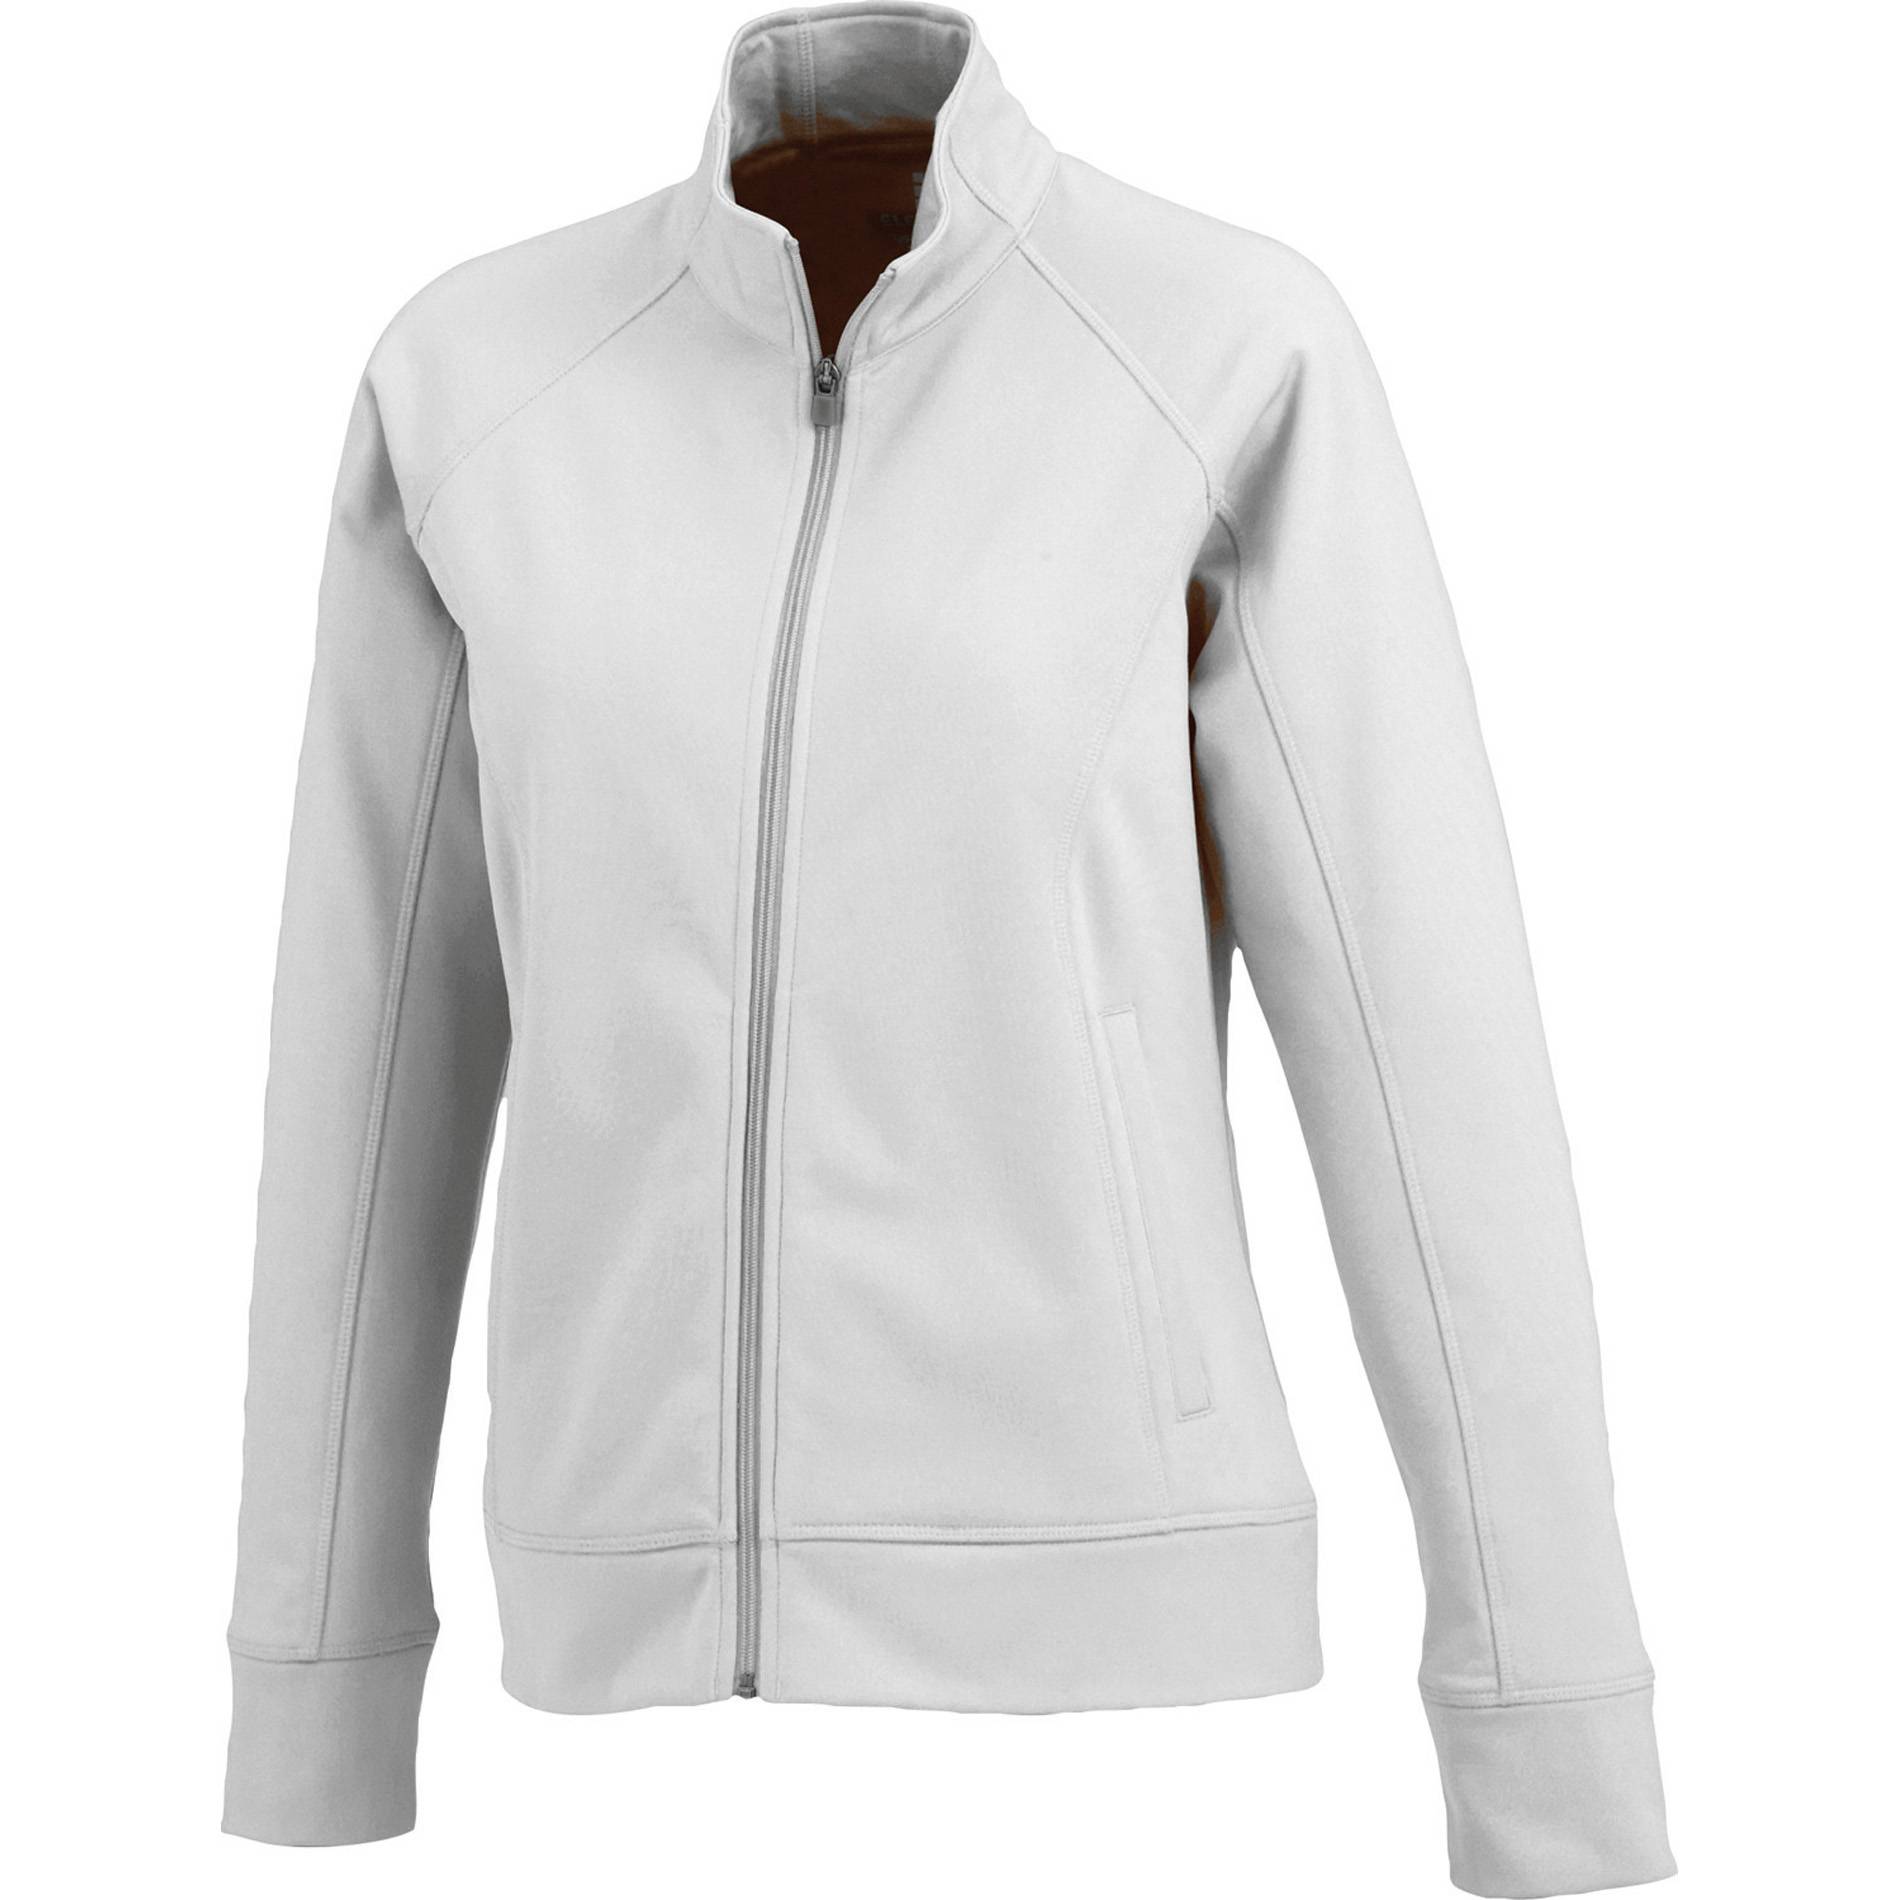 Apparel & Accessories :: Jackets & Vests :: Women's Jersey Knit Jacket